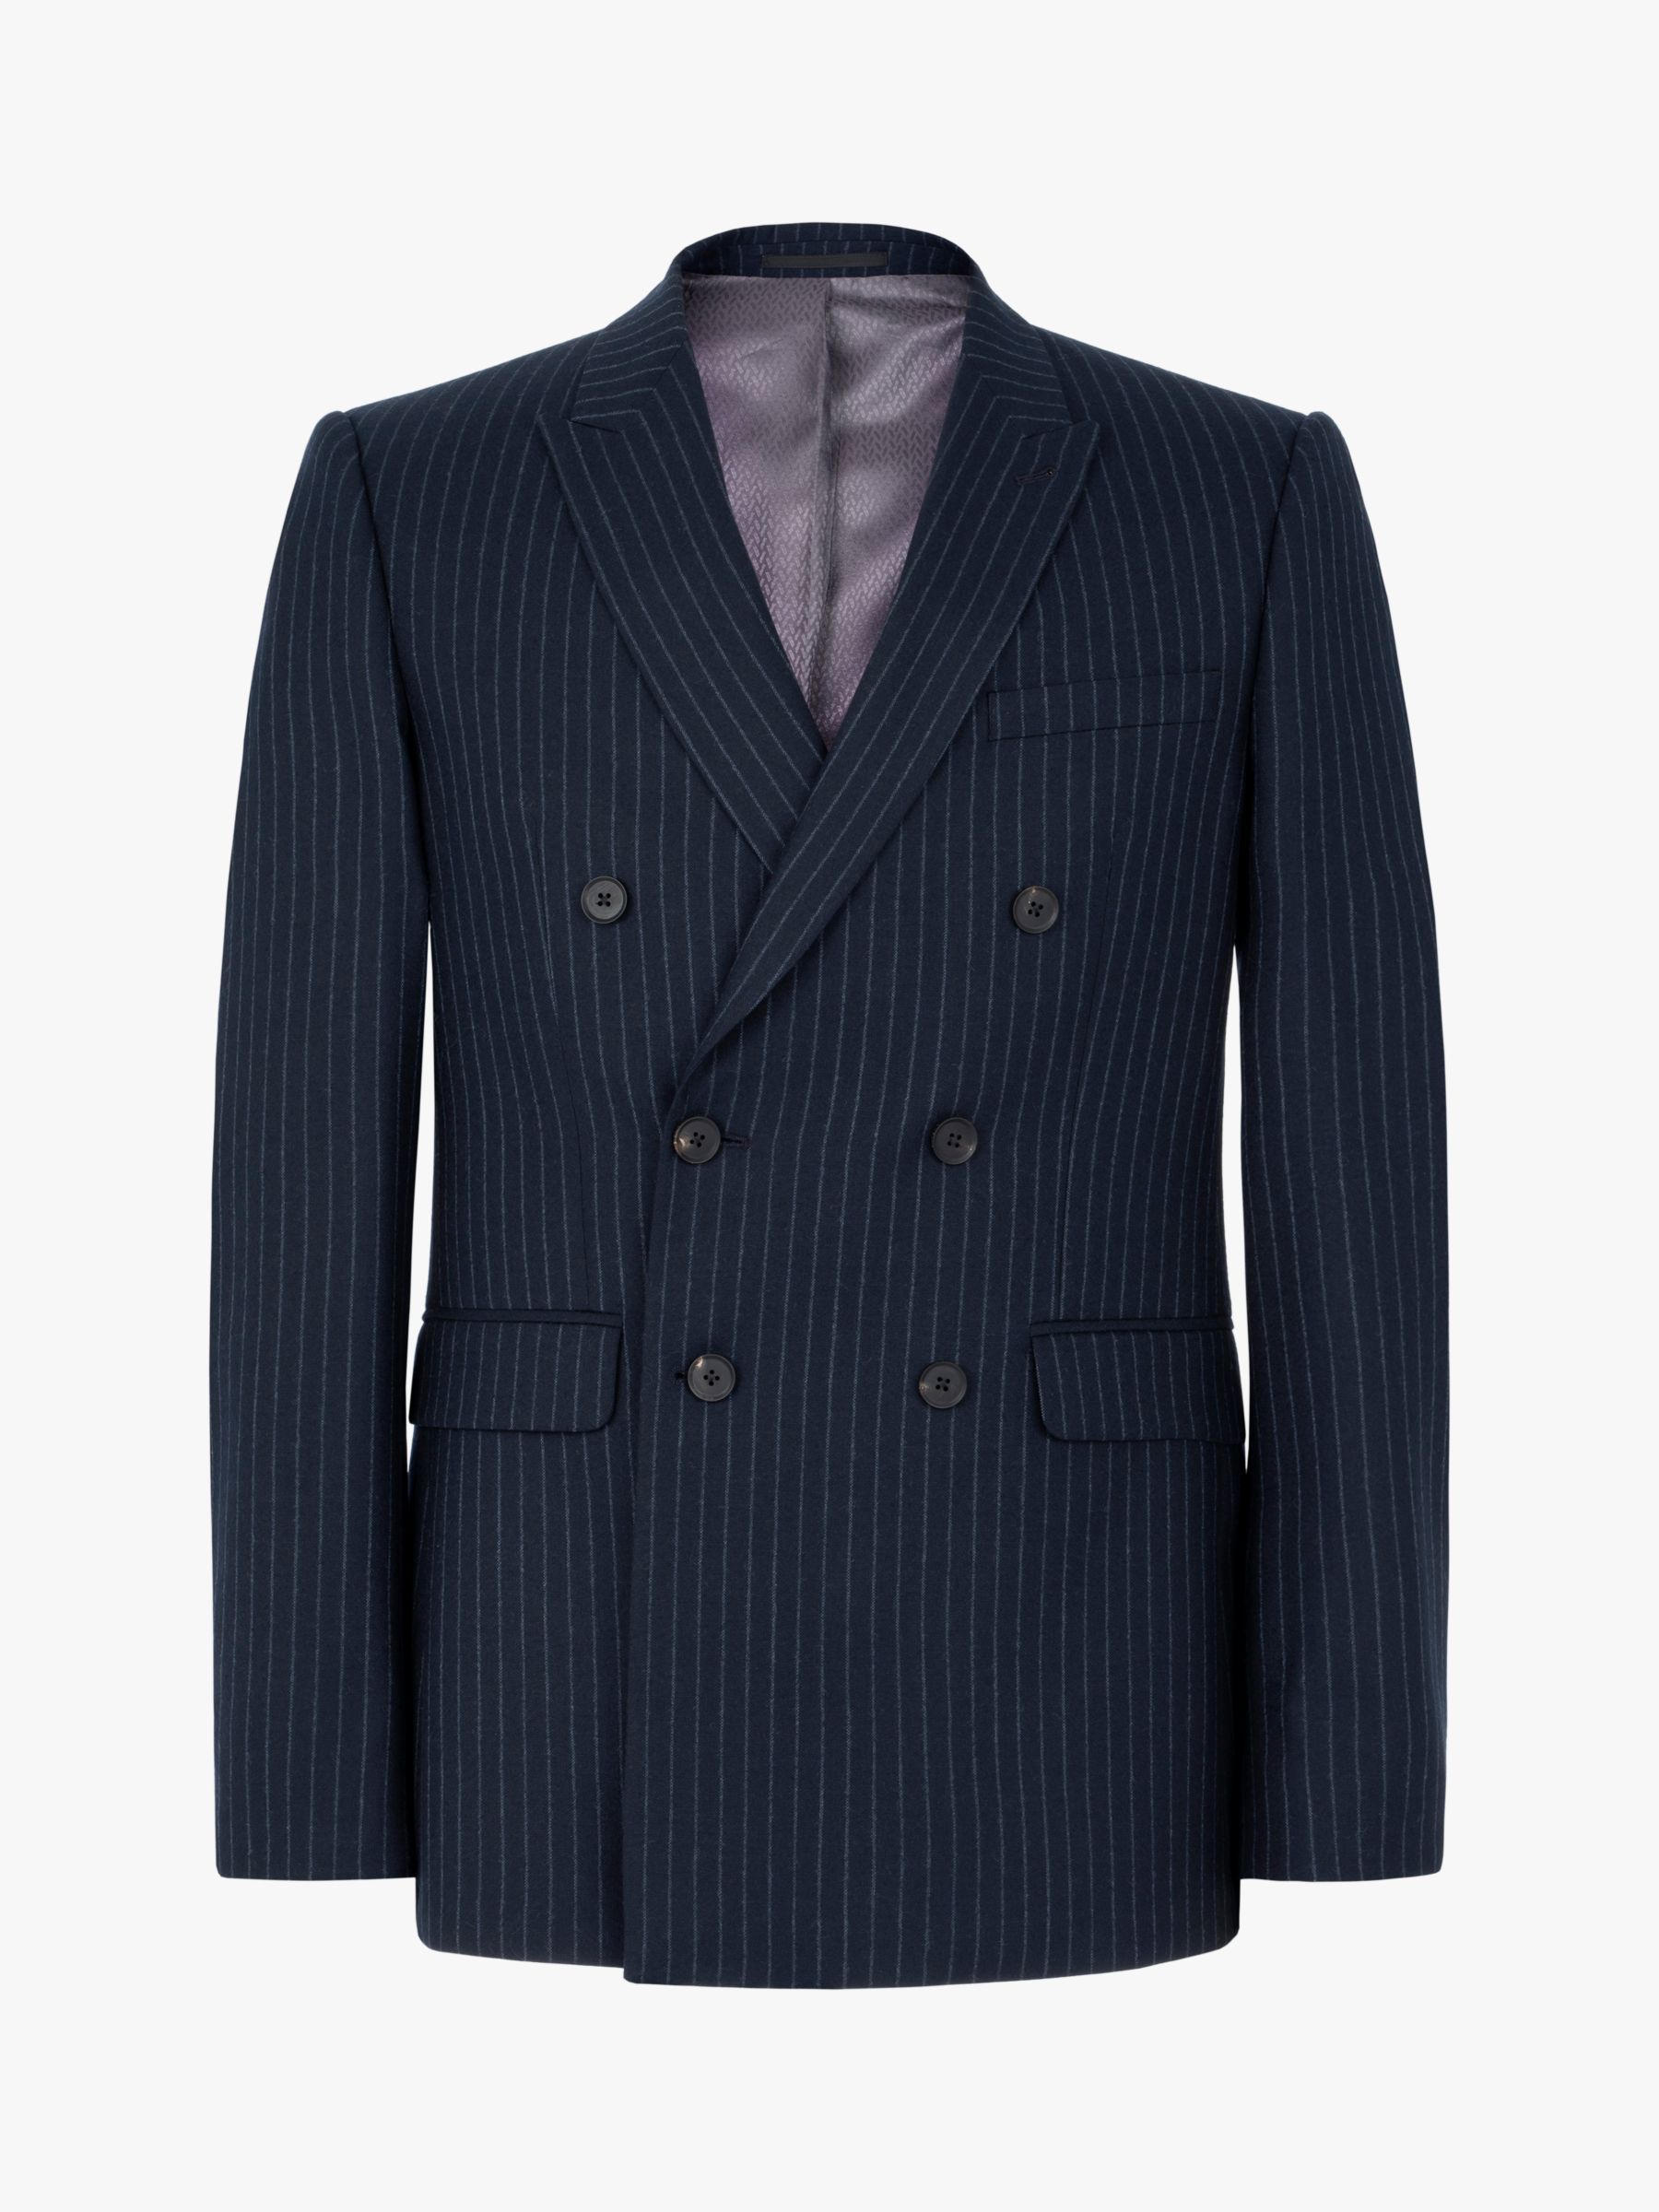 Jaeger Wool Pinstripe Regular Fit Double Breasted Suit Jacket, Navy